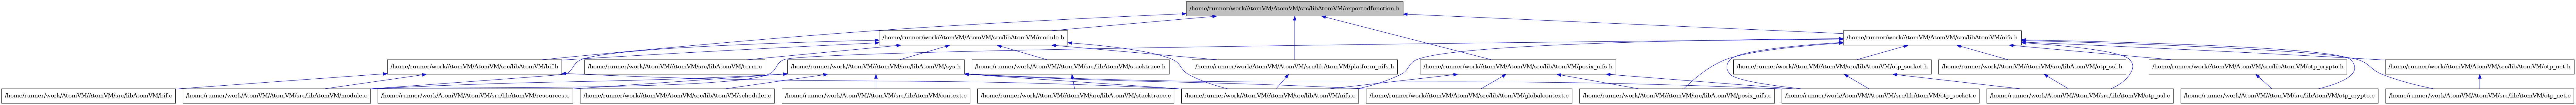 digraph {
    graph [bgcolor="#00000000"]
    node [shape=rectangle style=filled fillcolor="#FFFFFF" font=Helvetica padding=2]
    edge [color="#1414CE"]
    "3" [label="/home/runner/work/AtomVM/AtomVM/src/libAtomVM/bif.c" tooltip="/home/runner/work/AtomVM/AtomVM/src/libAtomVM/bif.c"]
    "2" [label="/home/runner/work/AtomVM/AtomVM/src/libAtomVM/bif.h" tooltip="/home/runner/work/AtomVM/AtomVM/src/libAtomVM/bif.h"]
    "7" [label="/home/runner/work/AtomVM/AtomVM/src/libAtomVM/platform_nifs.h" tooltip="/home/runner/work/AtomVM/AtomVM/src/libAtomVM/platform_nifs.h"]
    "25" [label="/home/runner/work/AtomVM/AtomVM/src/libAtomVM/posix_nifs.c" tooltip="/home/runner/work/AtomVM/AtomVM/src/libAtomVM/posix_nifs.c"]
    "26" [label="/home/runner/work/AtomVM/AtomVM/src/libAtomVM/posix_nifs.h" tooltip="/home/runner/work/AtomVM/AtomVM/src/libAtomVM/posix_nifs.h"]
    "15" [label="/home/runner/work/AtomVM/AtomVM/src/libAtomVM/scheduler.c" tooltip="/home/runner/work/AtomVM/AtomVM/src/libAtomVM/scheduler.c"]
    "1" [label="/home/runner/work/AtomVM/AtomVM/src/libAtomVM/exportedfunction.h" tooltip="/home/runner/work/AtomVM/AtomVM/src/libAtomVM/exportedfunction.h" fillcolor="#BFBFBF"]
    "11" [label="/home/runner/work/AtomVM/AtomVM/src/libAtomVM/context.c" tooltip="/home/runner/work/AtomVM/AtomVM/src/libAtomVM/context.c"]
    "9" [label="/home/runner/work/AtomVM/AtomVM/src/libAtomVM/stacktrace.c" tooltip="/home/runner/work/AtomVM/AtomVM/src/libAtomVM/stacktrace.c"]
    "8" [label="/home/runner/work/AtomVM/AtomVM/src/libAtomVM/stacktrace.h" tooltip="/home/runner/work/AtomVM/AtomVM/src/libAtomVM/stacktrace.h"]
    "4" [label="/home/runner/work/AtomVM/AtomVM/src/libAtomVM/module.c" tooltip="/home/runner/work/AtomVM/AtomVM/src/libAtomVM/module.c"]
    "6" [label="/home/runner/work/AtomVM/AtomVM/src/libAtomVM/module.h" tooltip="/home/runner/work/AtomVM/AtomVM/src/libAtomVM/module.h"]
    "16" [label="/home/runner/work/AtomVM/AtomVM/src/libAtomVM/term.c" tooltip="/home/runner/work/AtomVM/AtomVM/src/libAtomVM/term.c"]
    "23" [label="/home/runner/work/AtomVM/AtomVM/src/libAtomVM/otp_ssl.c" tooltip="/home/runner/work/AtomVM/AtomVM/src/libAtomVM/otp_ssl.c"]
    "24" [label="/home/runner/work/AtomVM/AtomVM/src/libAtomVM/otp_ssl.h" tooltip="/home/runner/work/AtomVM/AtomVM/src/libAtomVM/otp_ssl.h"]
    "14" [label="/home/runner/work/AtomVM/AtomVM/src/libAtomVM/resources.c" tooltip="/home/runner/work/AtomVM/AtomVM/src/libAtomVM/resources.c"]
    "18" [label="/home/runner/work/AtomVM/AtomVM/src/libAtomVM/otp_crypto.c" tooltip="/home/runner/work/AtomVM/AtomVM/src/libAtomVM/otp_crypto.c"]
    "19" [label="/home/runner/work/AtomVM/AtomVM/src/libAtomVM/otp_crypto.h" tooltip="/home/runner/work/AtomVM/AtomVM/src/libAtomVM/otp_crypto.h"]
    "20" [label="/home/runner/work/AtomVM/AtomVM/src/libAtomVM/otp_net.c" tooltip="/home/runner/work/AtomVM/AtomVM/src/libAtomVM/otp_net.c"]
    "21" [label="/home/runner/work/AtomVM/AtomVM/src/libAtomVM/otp_net.h" tooltip="/home/runner/work/AtomVM/AtomVM/src/libAtomVM/otp_net.h"]
    "10" [label="/home/runner/work/AtomVM/AtomVM/src/libAtomVM/sys.h" tooltip="/home/runner/work/AtomVM/AtomVM/src/libAtomVM/sys.h"]
    "5" [label="/home/runner/work/AtomVM/AtomVM/src/libAtomVM/nifs.c" tooltip="/home/runner/work/AtomVM/AtomVM/src/libAtomVM/nifs.c"]
    "17" [label="/home/runner/work/AtomVM/AtomVM/src/libAtomVM/nifs.h" tooltip="/home/runner/work/AtomVM/AtomVM/src/libAtomVM/nifs.h"]
    "12" [label="/home/runner/work/AtomVM/AtomVM/src/libAtomVM/globalcontext.c" tooltip="/home/runner/work/AtomVM/AtomVM/src/libAtomVM/globalcontext.c"]
    "13" [label="/home/runner/work/AtomVM/AtomVM/src/libAtomVM/otp_socket.c" tooltip="/home/runner/work/AtomVM/AtomVM/src/libAtomVM/otp_socket.c"]
    "22" [label="/home/runner/work/AtomVM/AtomVM/src/libAtomVM/otp_socket.h" tooltip="/home/runner/work/AtomVM/AtomVM/src/libAtomVM/otp_socket.h"]
    "2" -> "3" [dir=back tooltip="include"]
    "2" -> "4" [dir=back tooltip="include"]
    "2" -> "5" [dir=back tooltip="include"]
    "7" -> "5" [dir=back tooltip="include"]
    "26" -> "12" [dir=back tooltip="include"]
    "26" -> "5" [dir=back tooltip="include"]
    "26" -> "13" [dir=back tooltip="include"]
    "26" -> "25" [dir=back tooltip="include"]
    "1" -> "2" [dir=back tooltip="include"]
    "1" -> "6" [dir=back tooltip="include"]
    "1" -> "17" [dir=back tooltip="include"]
    "1" -> "7" [dir=back tooltip="include"]
    "1" -> "26" [dir=back tooltip="include"]
    "8" -> "9" [dir=back tooltip="include"]
    "6" -> "2" [dir=back tooltip="include"]
    "6" -> "4" [dir=back tooltip="include"]
    "6" -> "5" [dir=back tooltip="include"]
    "6" -> "7" [dir=back tooltip="include"]
    "6" -> "8" [dir=back tooltip="include"]
    "6" -> "10" [dir=back tooltip="include"]
    "6" -> "16" [dir=back tooltip="include"]
    "24" -> "23" [dir=back tooltip="include"]
    "19" -> "18" [dir=back tooltip="include"]
    "21" -> "20" [dir=back tooltip="include"]
    "10" -> "11" [dir=back tooltip="include"]
    "10" -> "12" [dir=back tooltip="include"]
    "10" -> "4" [dir=back tooltip="include"]
    "10" -> "5" [dir=back tooltip="include"]
    "10" -> "13" [dir=back tooltip="include"]
    "10" -> "14" [dir=back tooltip="include"]
    "10" -> "15" [dir=back tooltip="include"]
    "17" -> "4" [dir=back tooltip="include"]
    "17" -> "5" [dir=back tooltip="include"]
    "17" -> "18" [dir=back tooltip="include"]
    "17" -> "19" [dir=back tooltip="include"]
    "17" -> "20" [dir=back tooltip="include"]
    "17" -> "21" [dir=back tooltip="include"]
    "17" -> "13" [dir=back tooltip="include"]
    "17" -> "22" [dir=back tooltip="include"]
    "17" -> "23" [dir=back tooltip="include"]
    "17" -> "24" [dir=back tooltip="include"]
    "17" -> "25" [dir=back tooltip="include"]
    "22" -> "13" [dir=back tooltip="include"]
    "22" -> "23" [dir=back tooltip="include"]
}